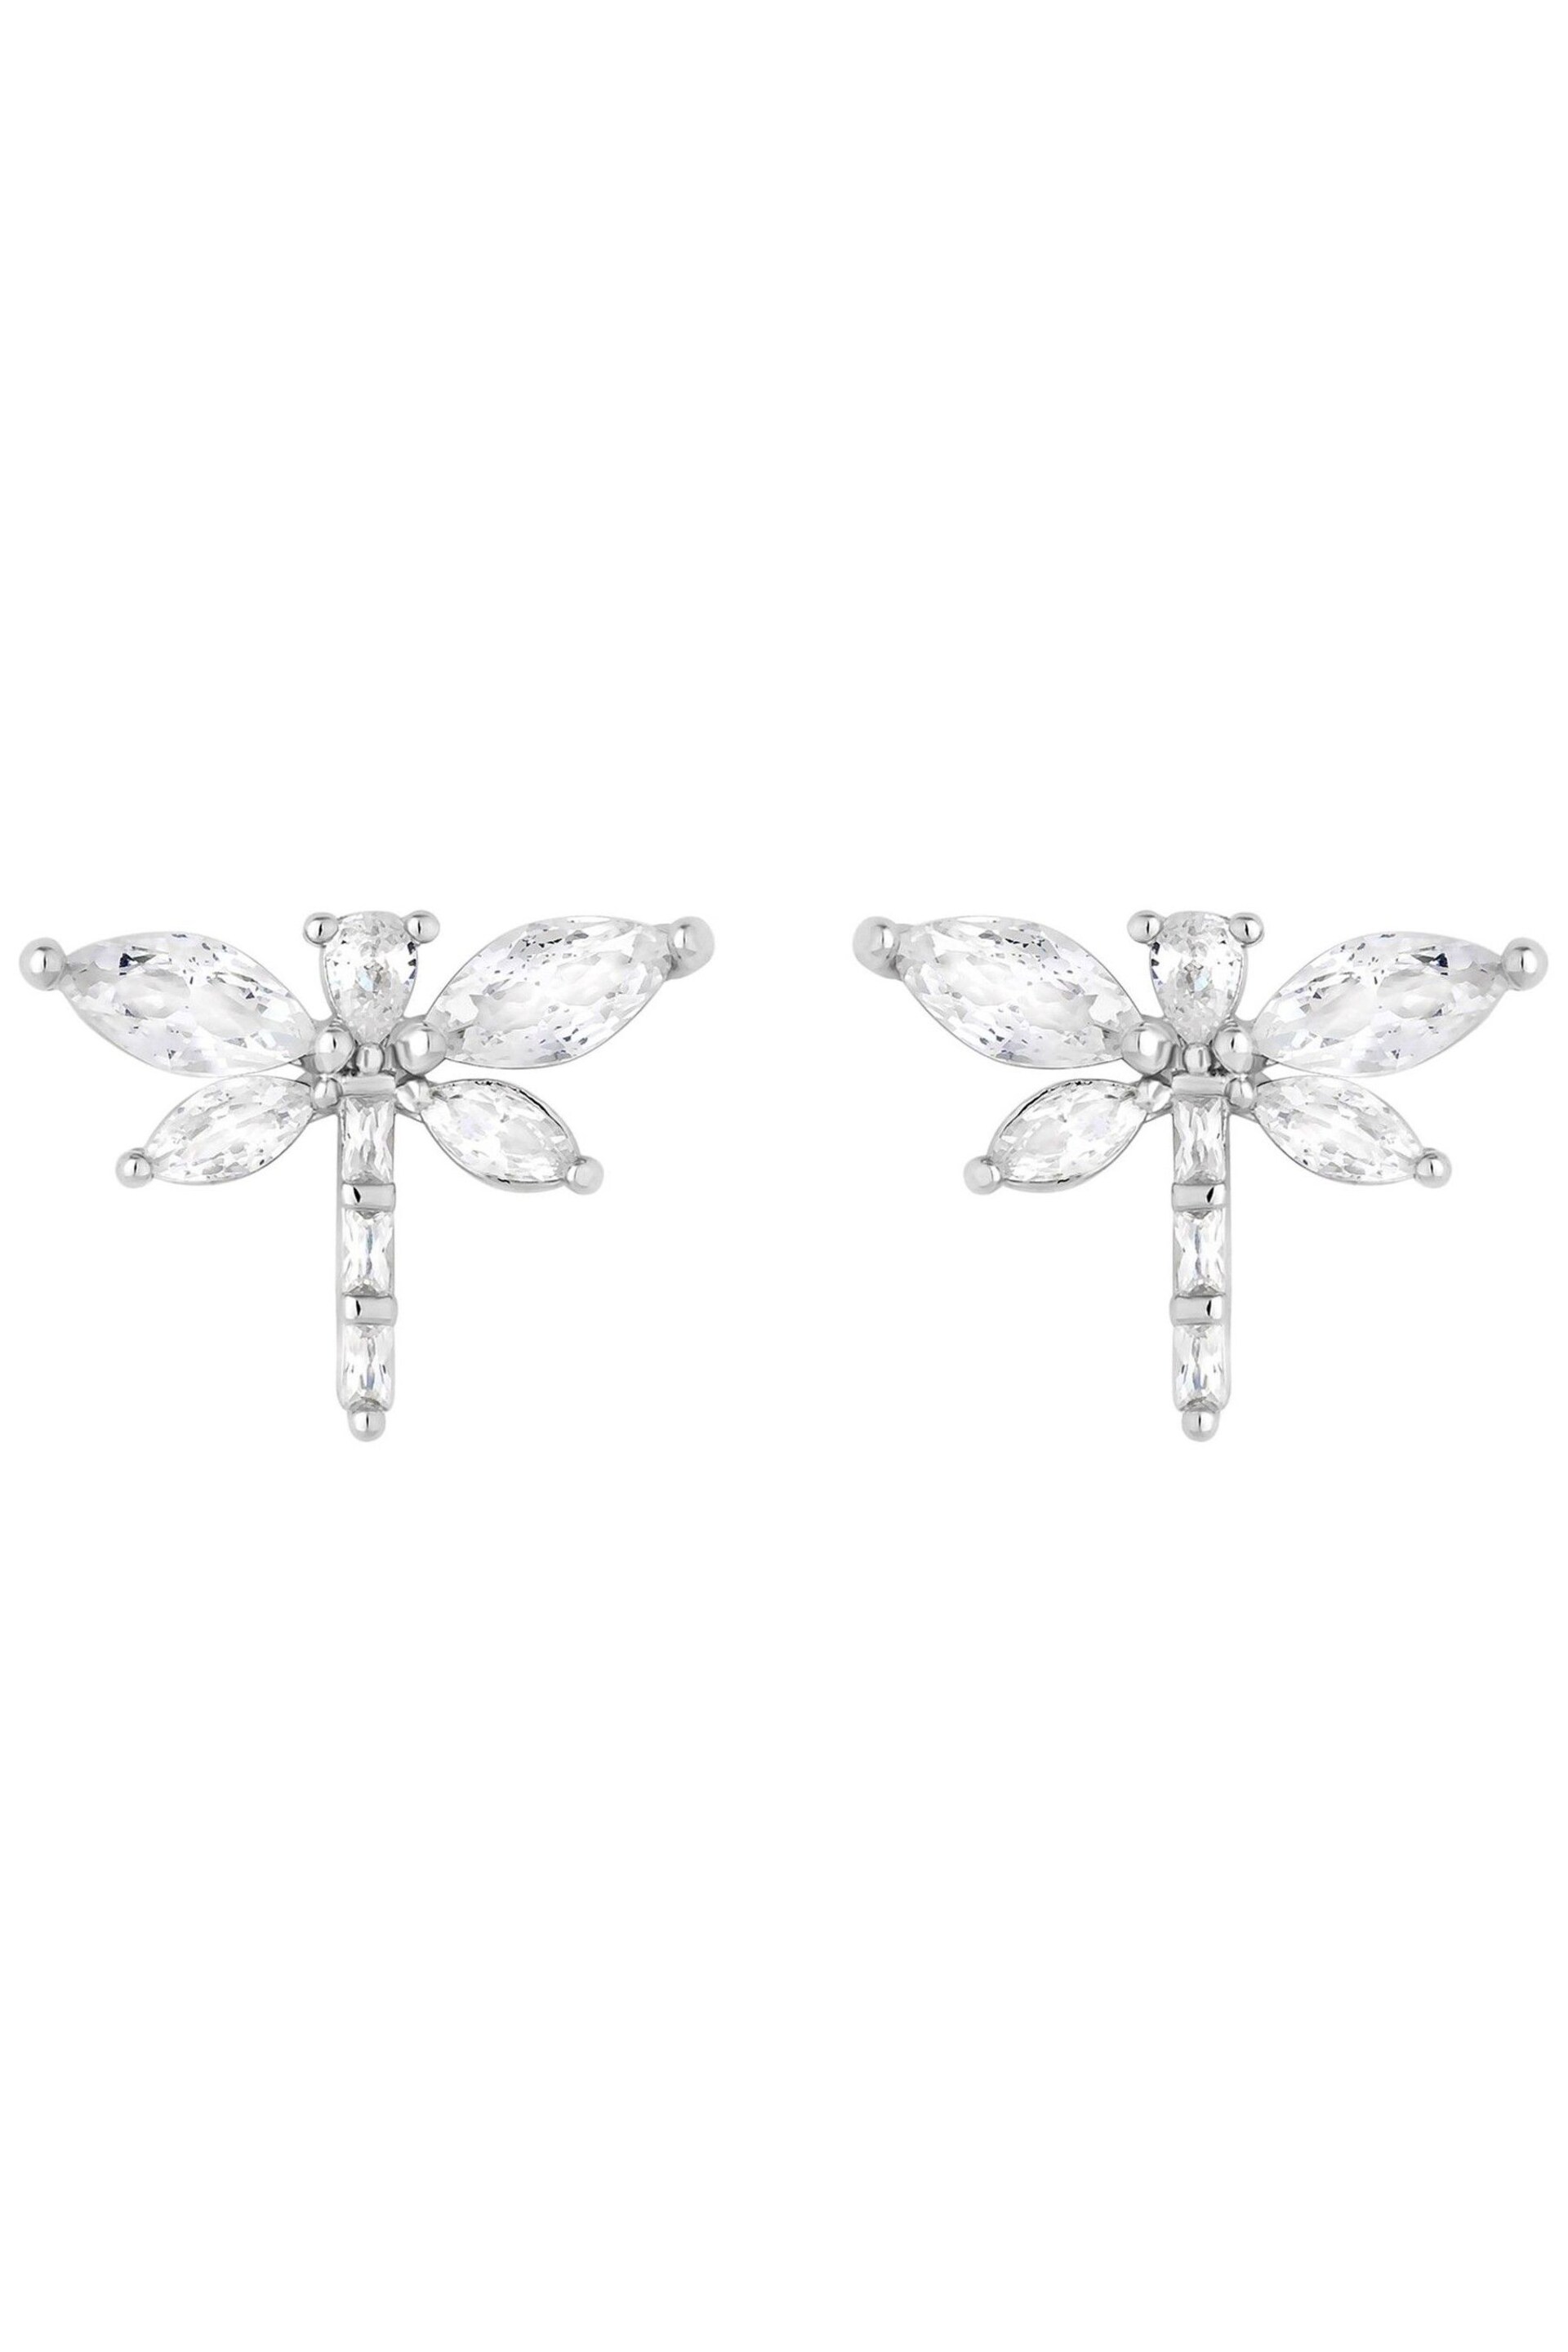 Jon Richard Silver Tone Cubic Zirconia Crystal Dragonfly Stud Earrings - Image 1 of 3